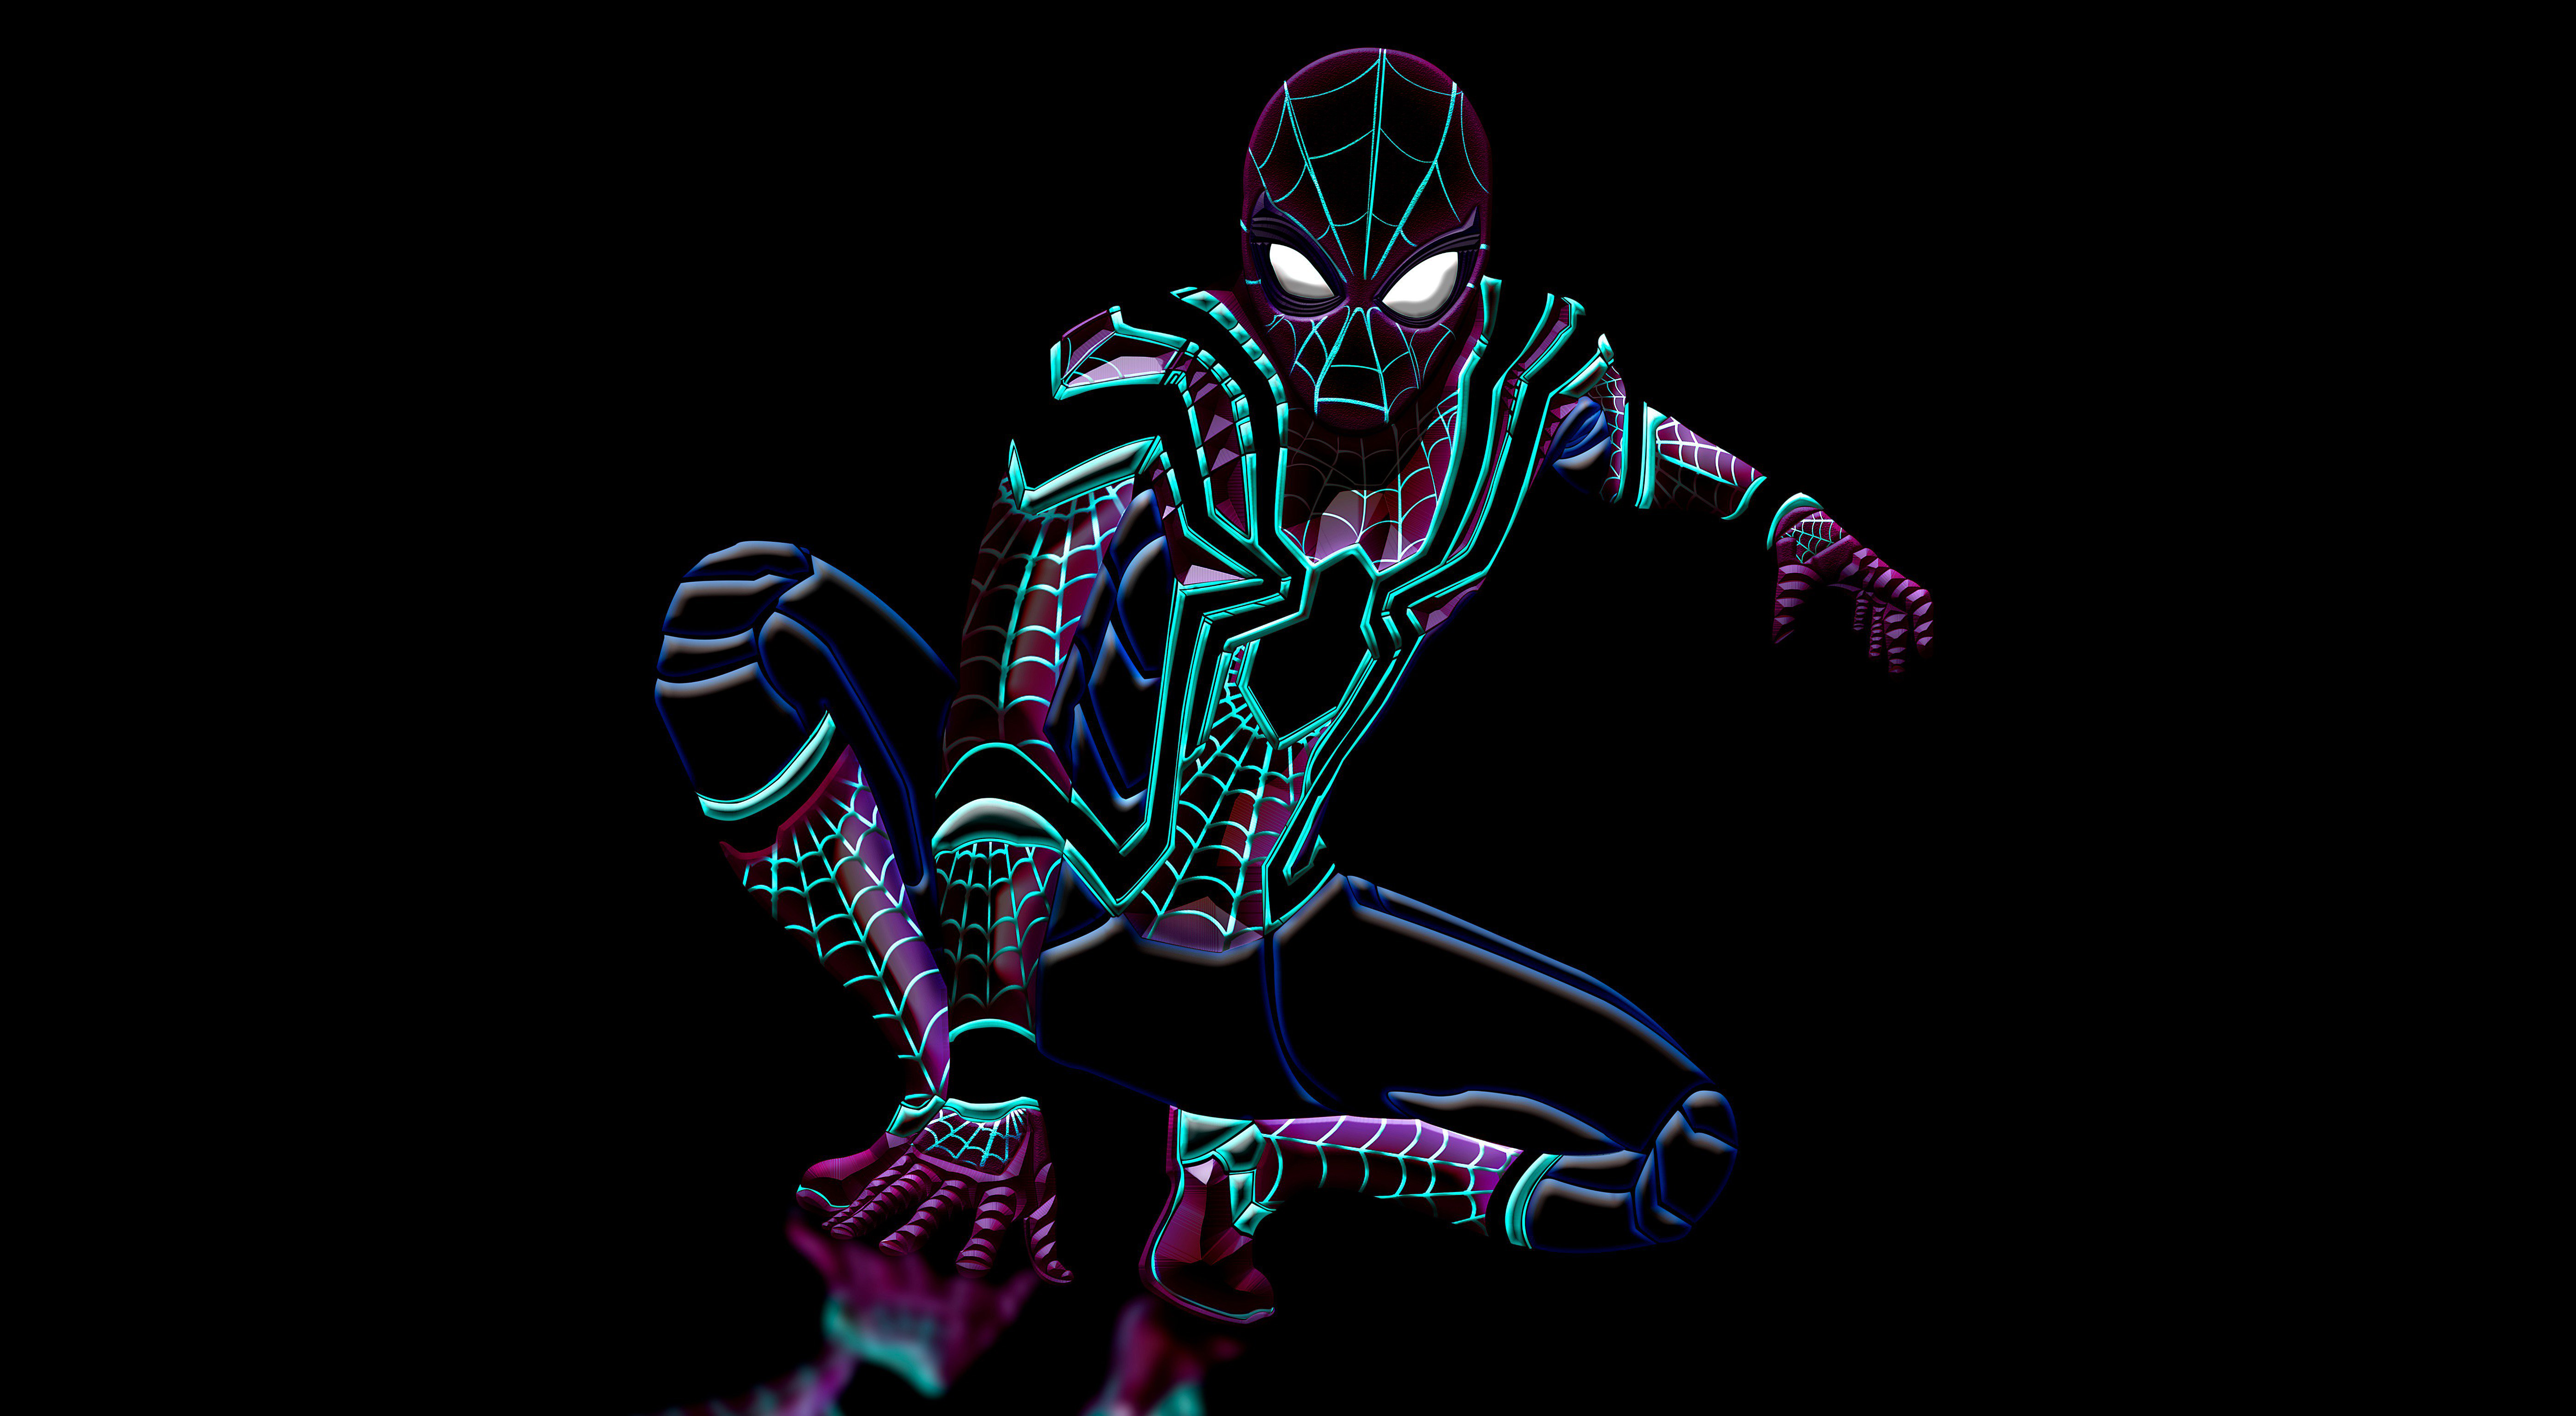 Spider Man 4K Wallpaper, Neon Art, Black Background, Marvel Superheroes, 5K, Graphics CGI